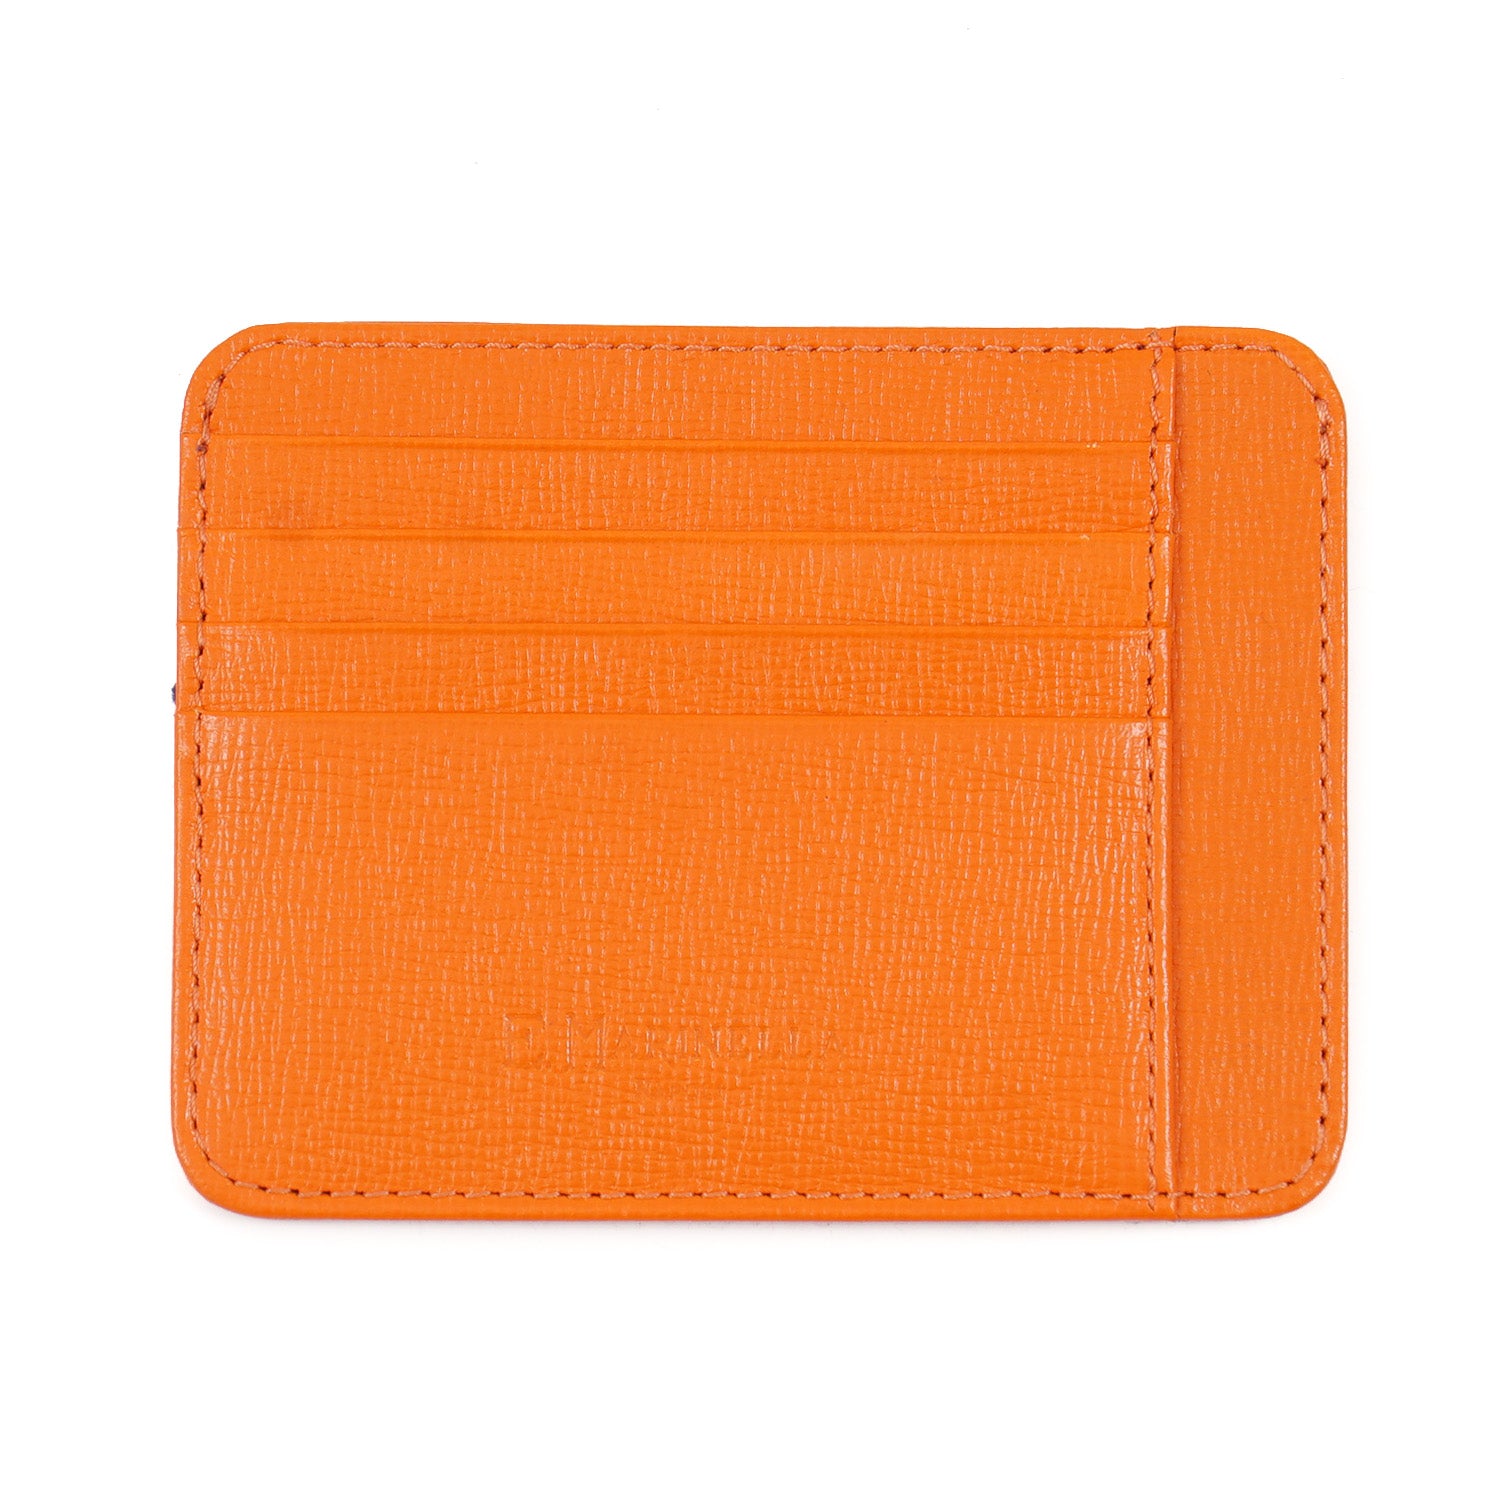 E.Marinella Credit Card Holder in Saffiano Leather - Top Shelf Apparel